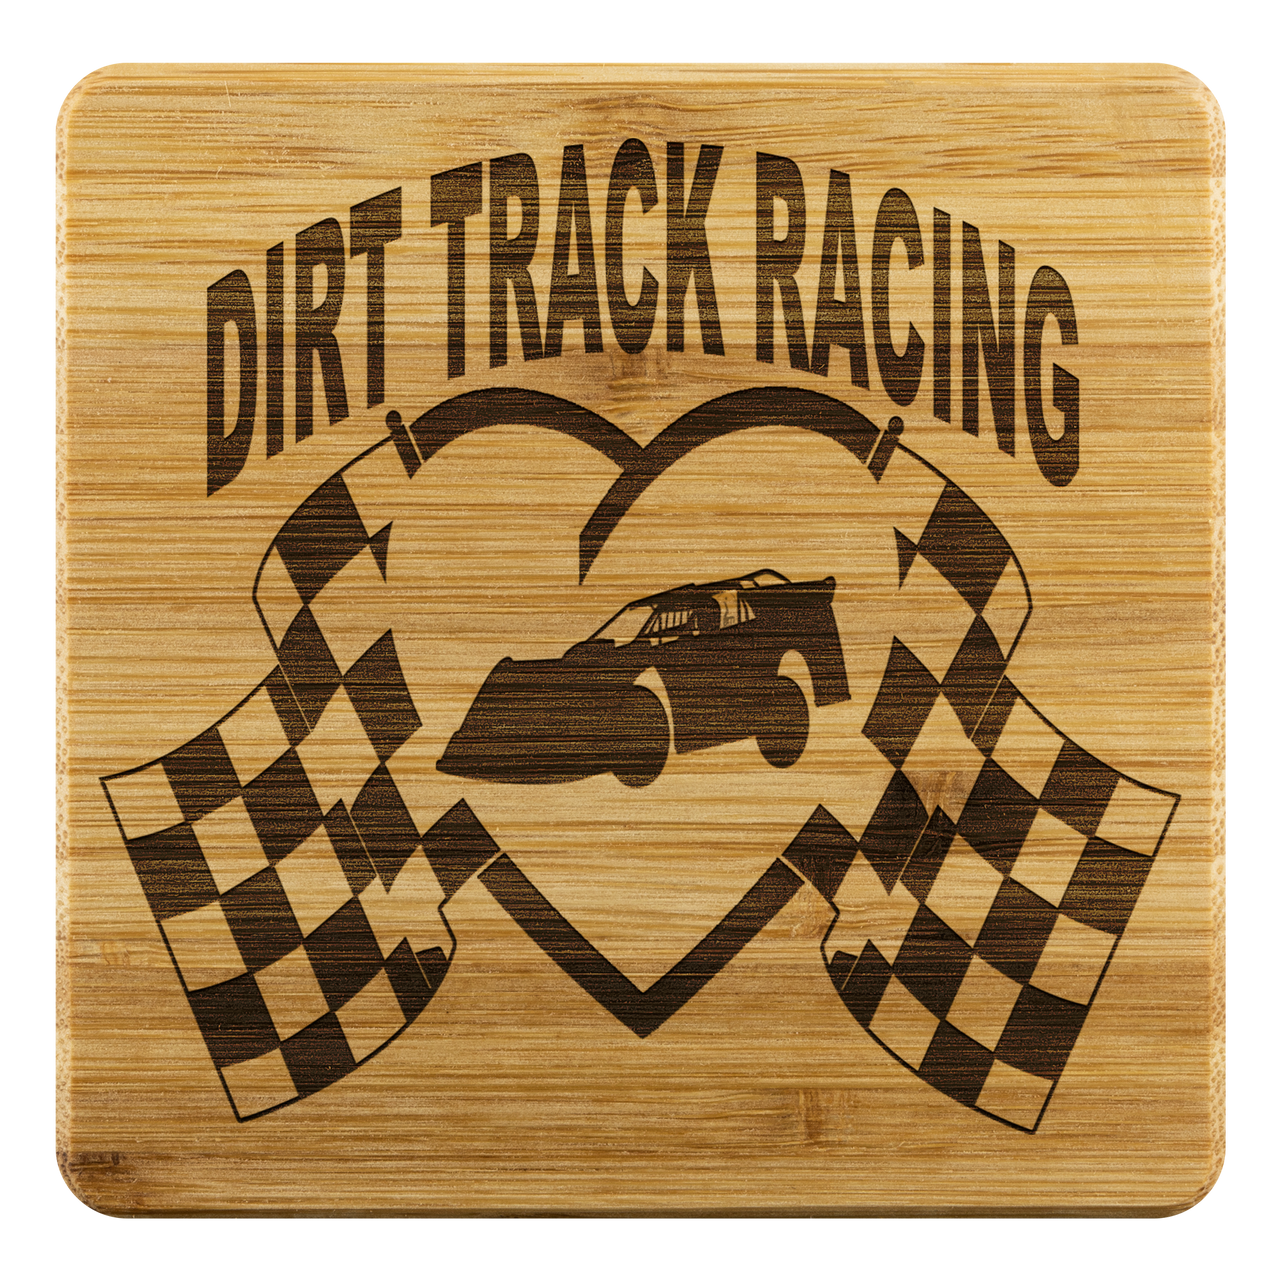 Dirt Track Racing Late Model Bamboo Coaster